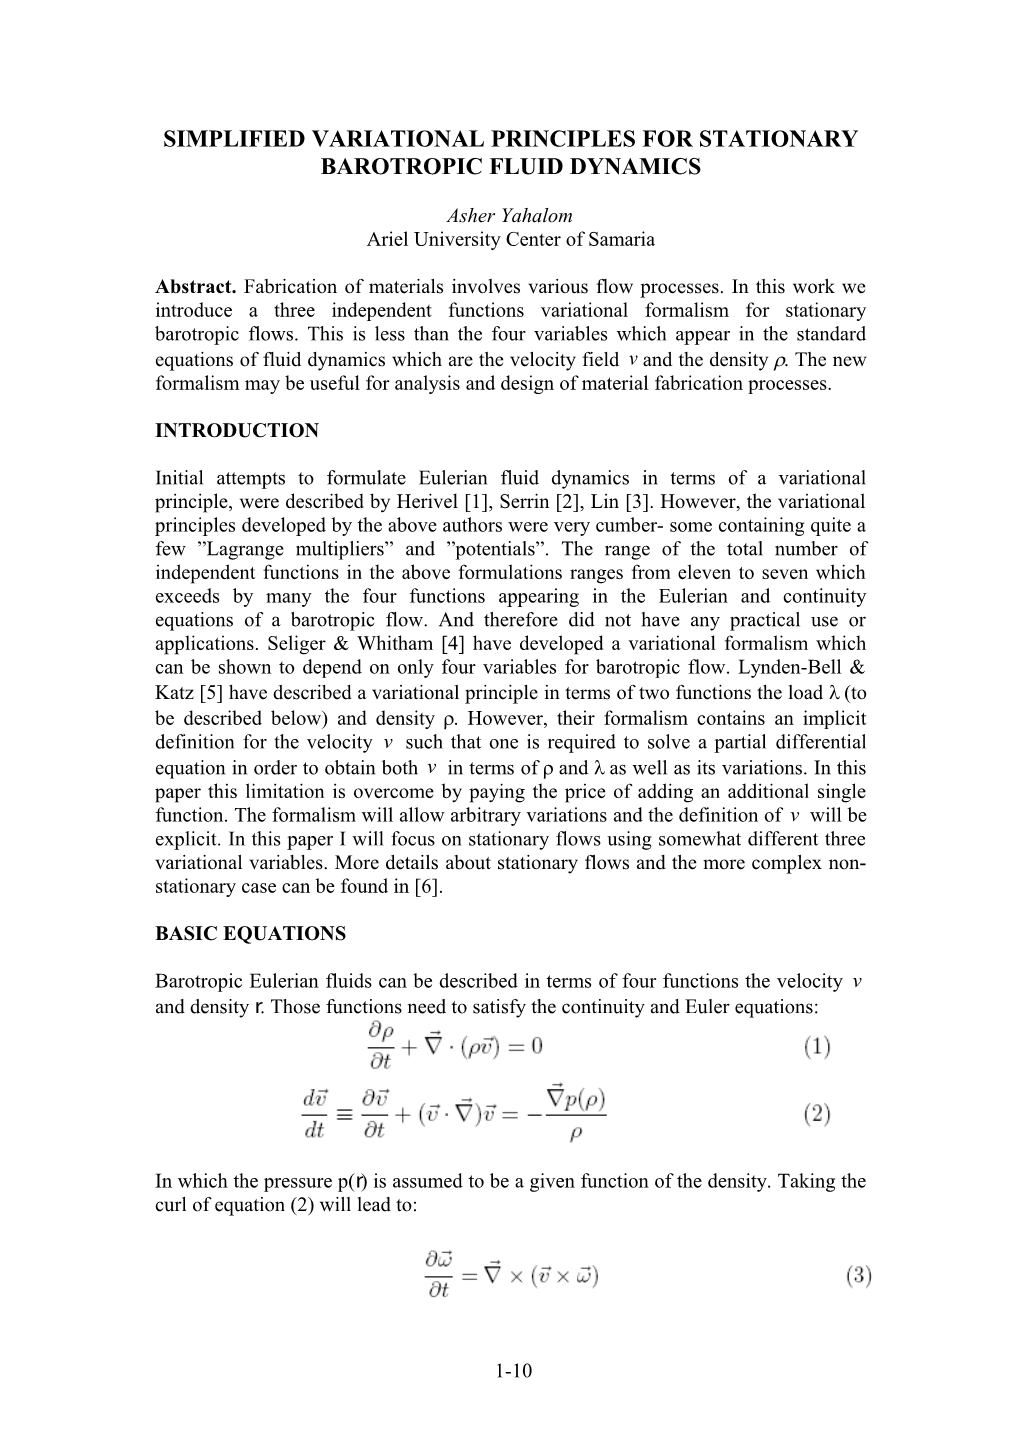 Simplified Variational Principles for Stationary Barotropic Fluid Dynamics